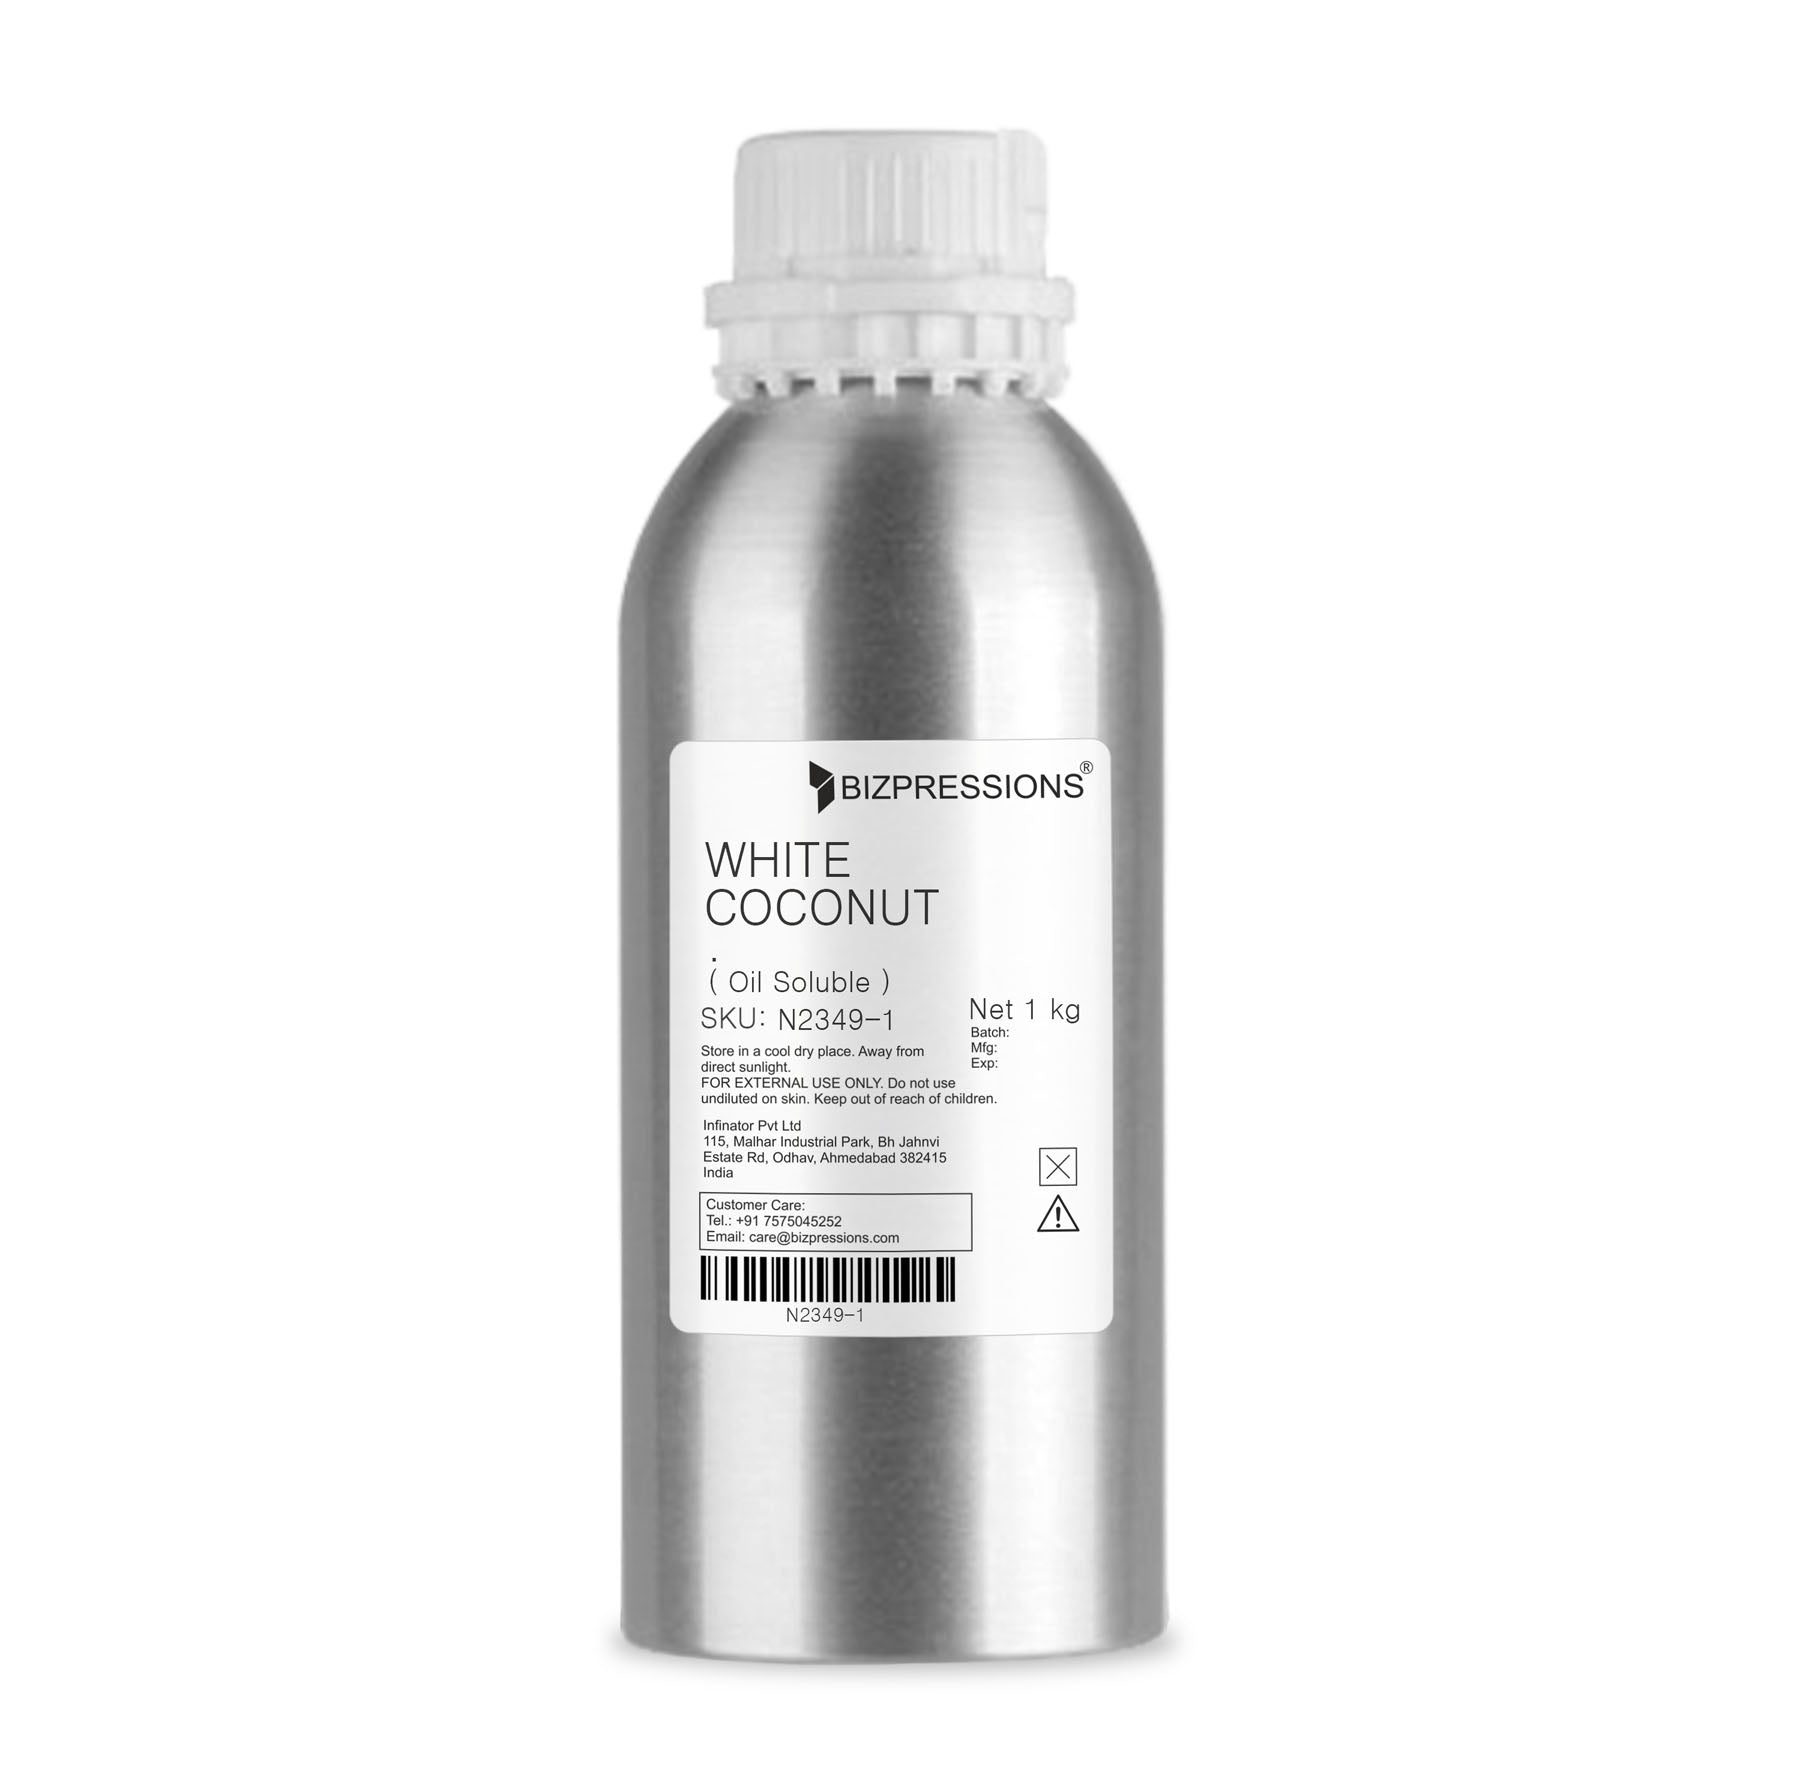 WHITE COCONUT - Fragrance ( Oil Soluble )